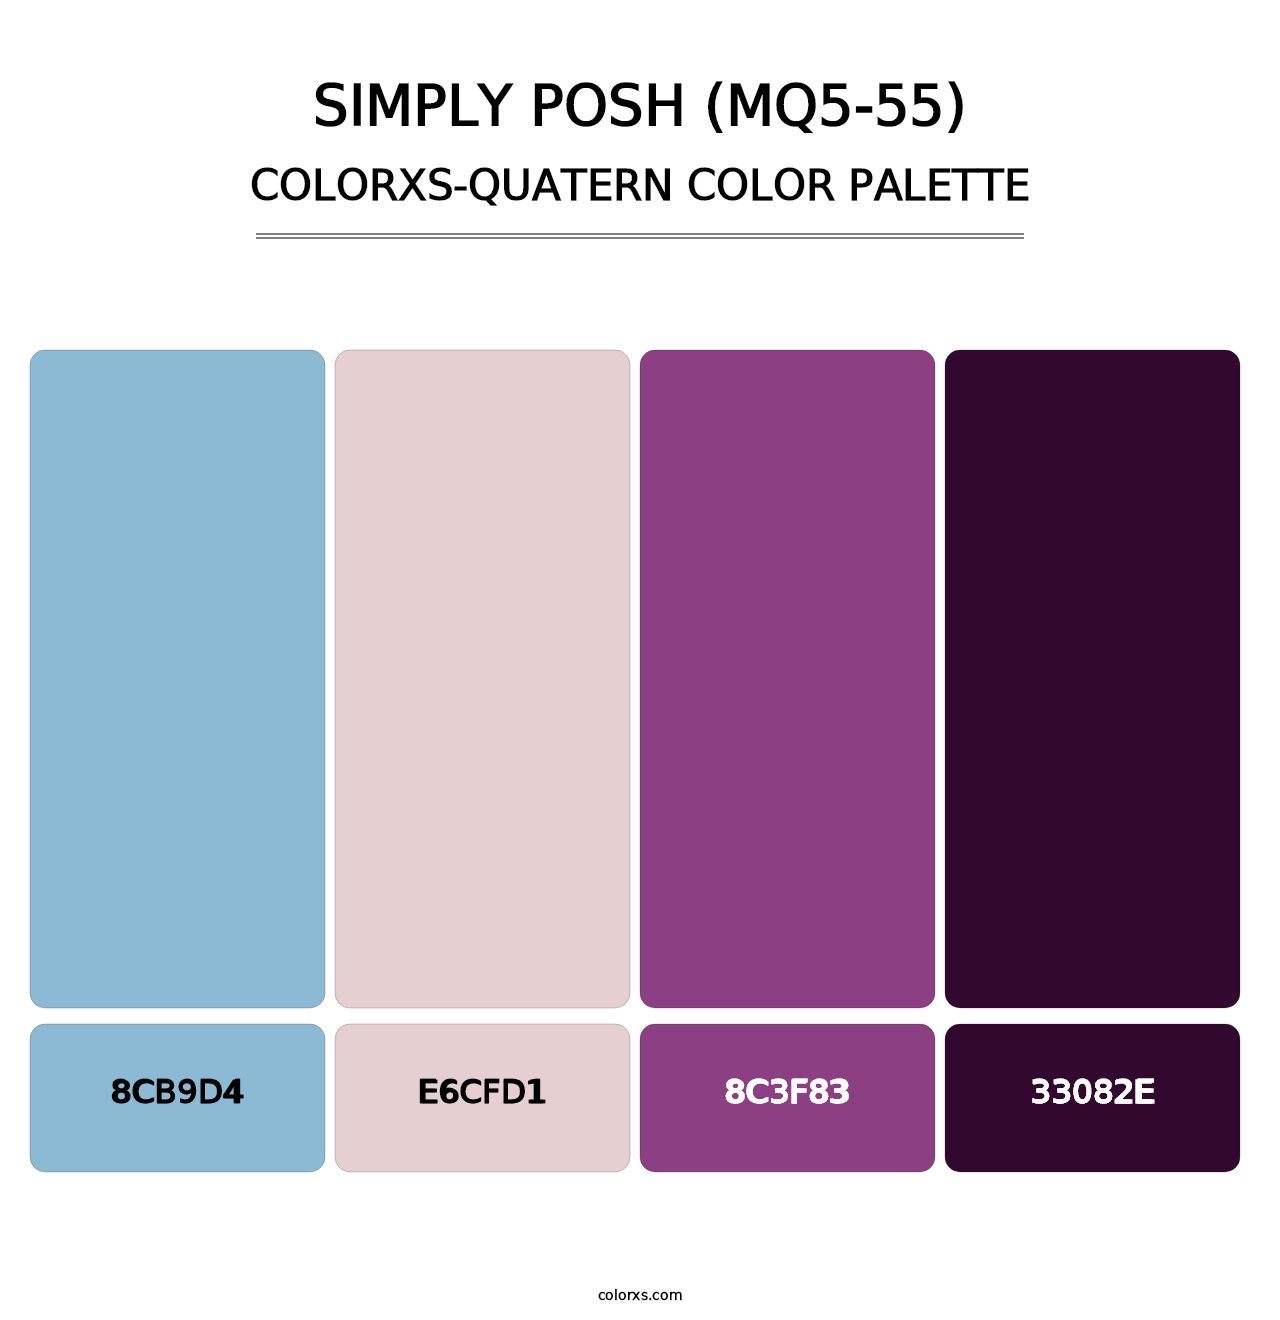 Simply Posh (MQ5-55) - Colorxs Quatern Palette